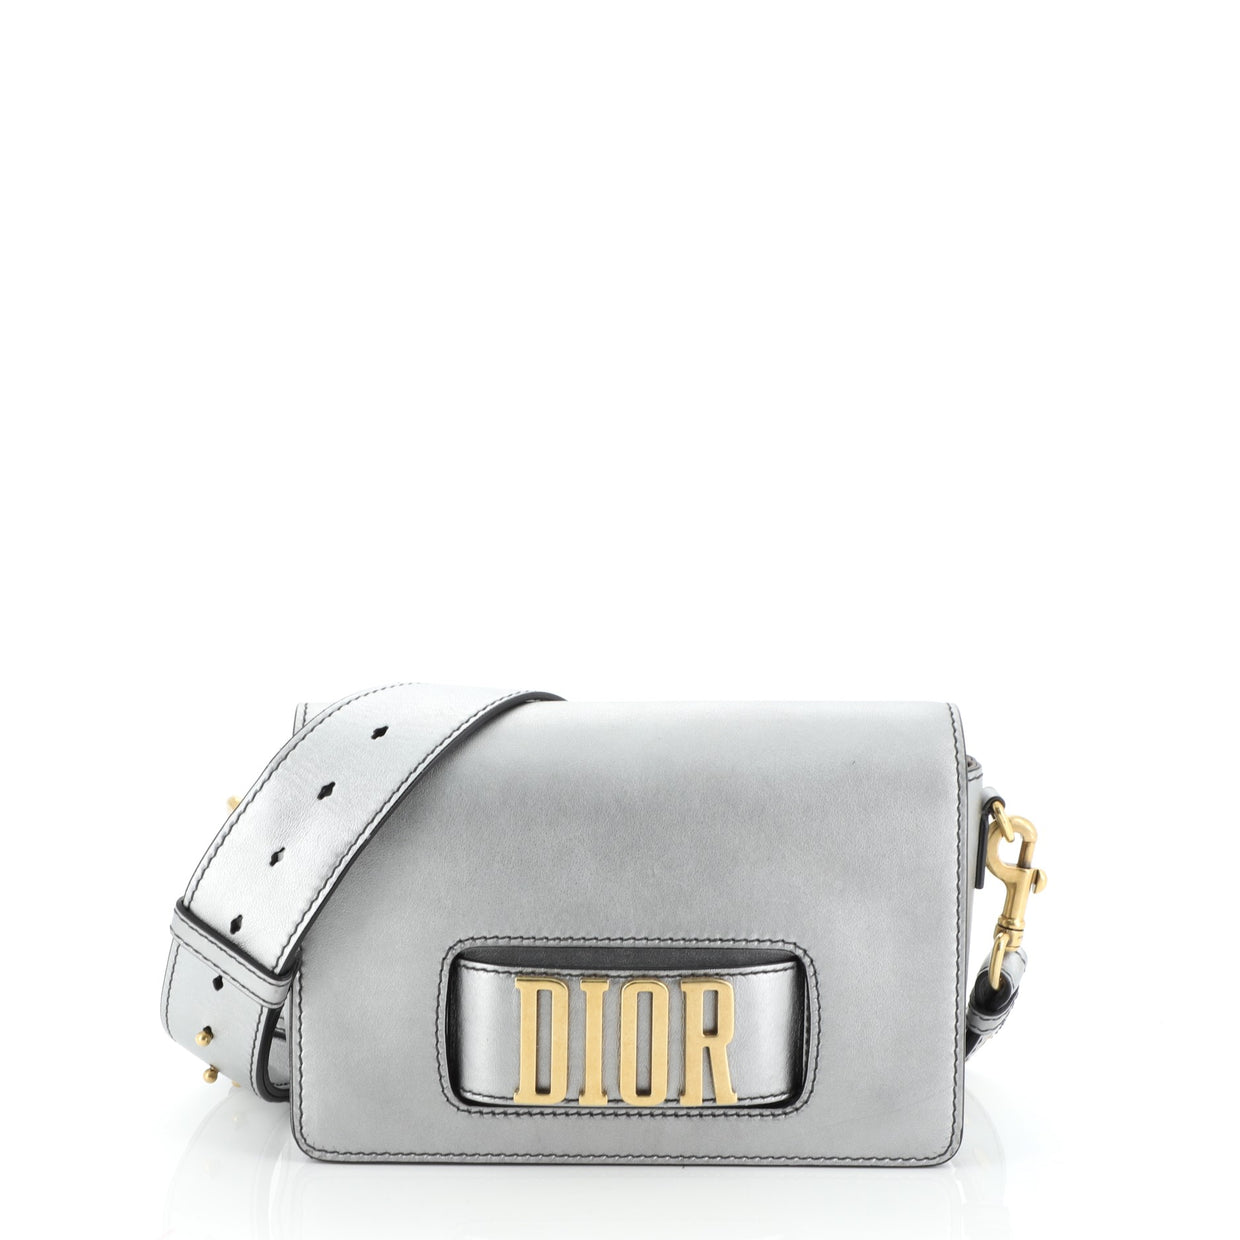 Christian Dior Dio(r)evolution Flap Bag Leather Medium Silver 473894